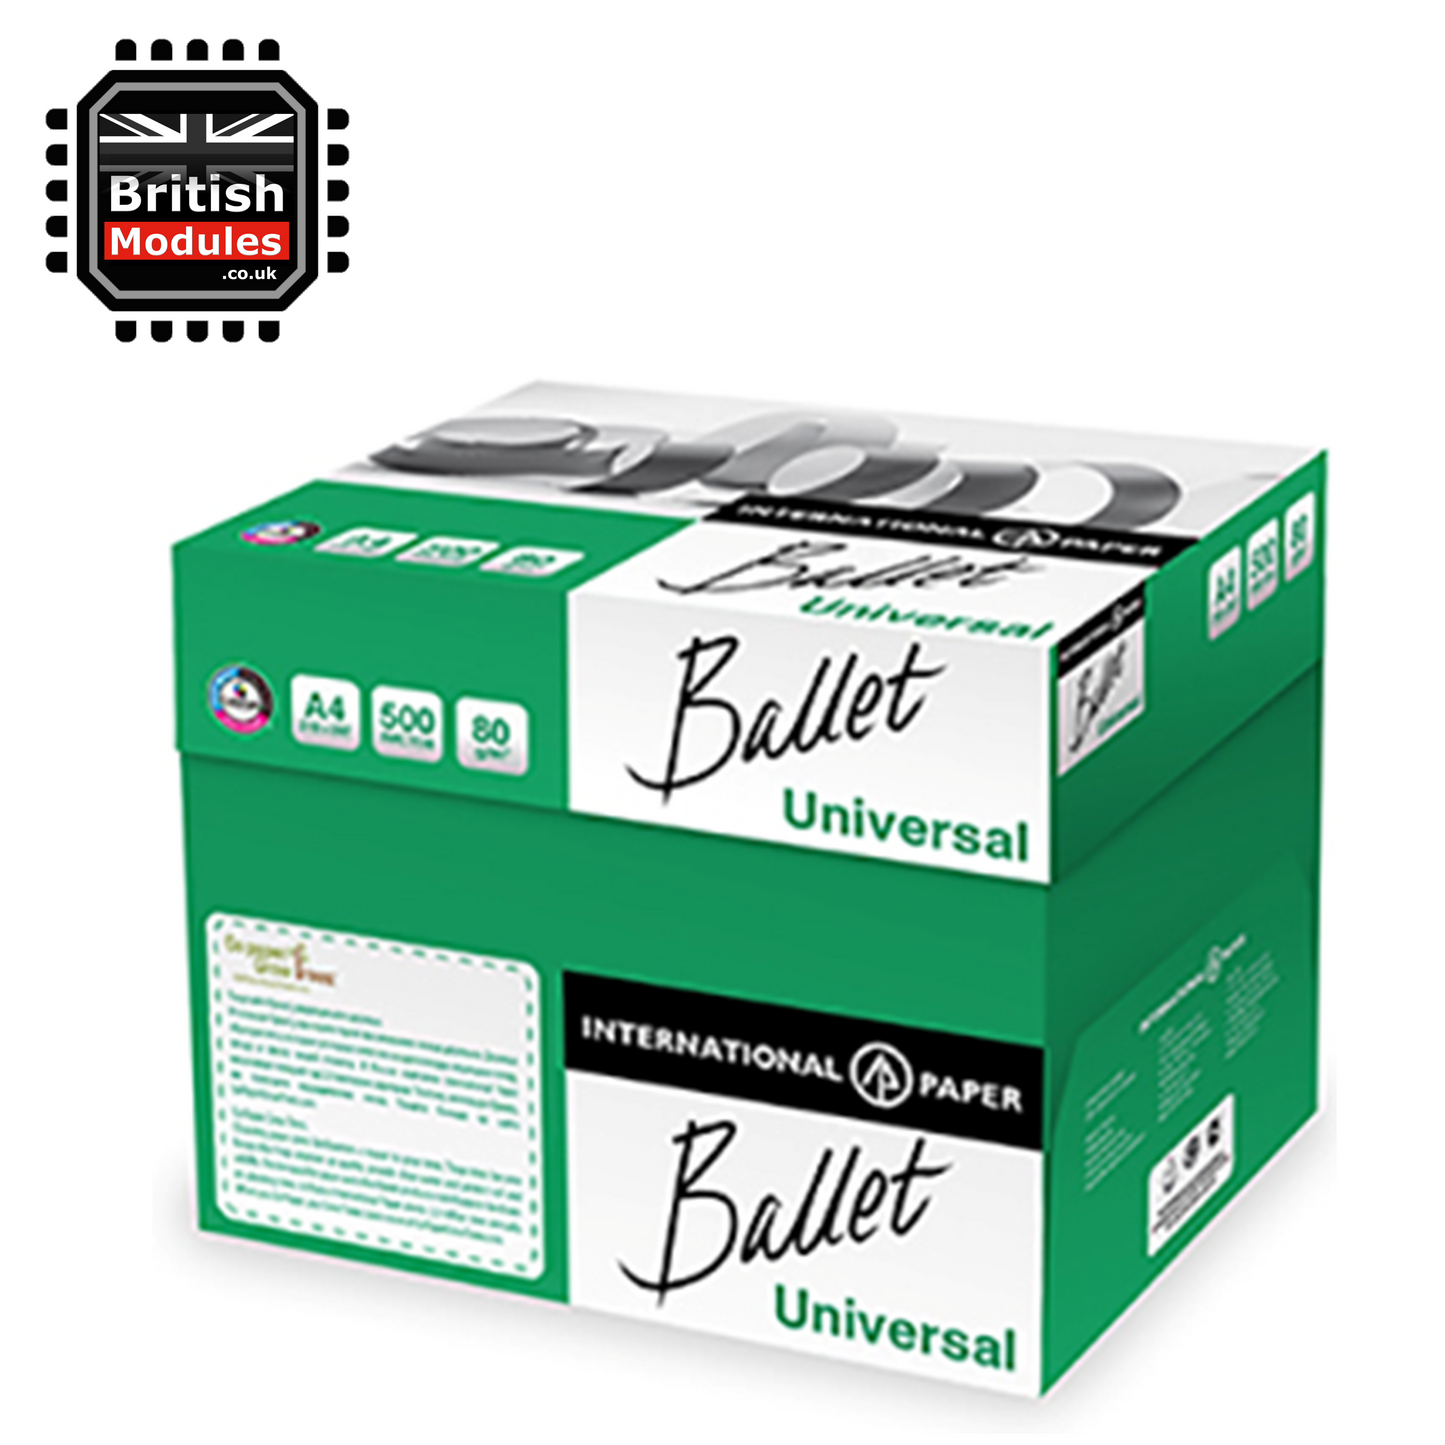 Ballet Universal A4 Copy Paper 80gsm Box of 5 Reams (2500 Sheets)